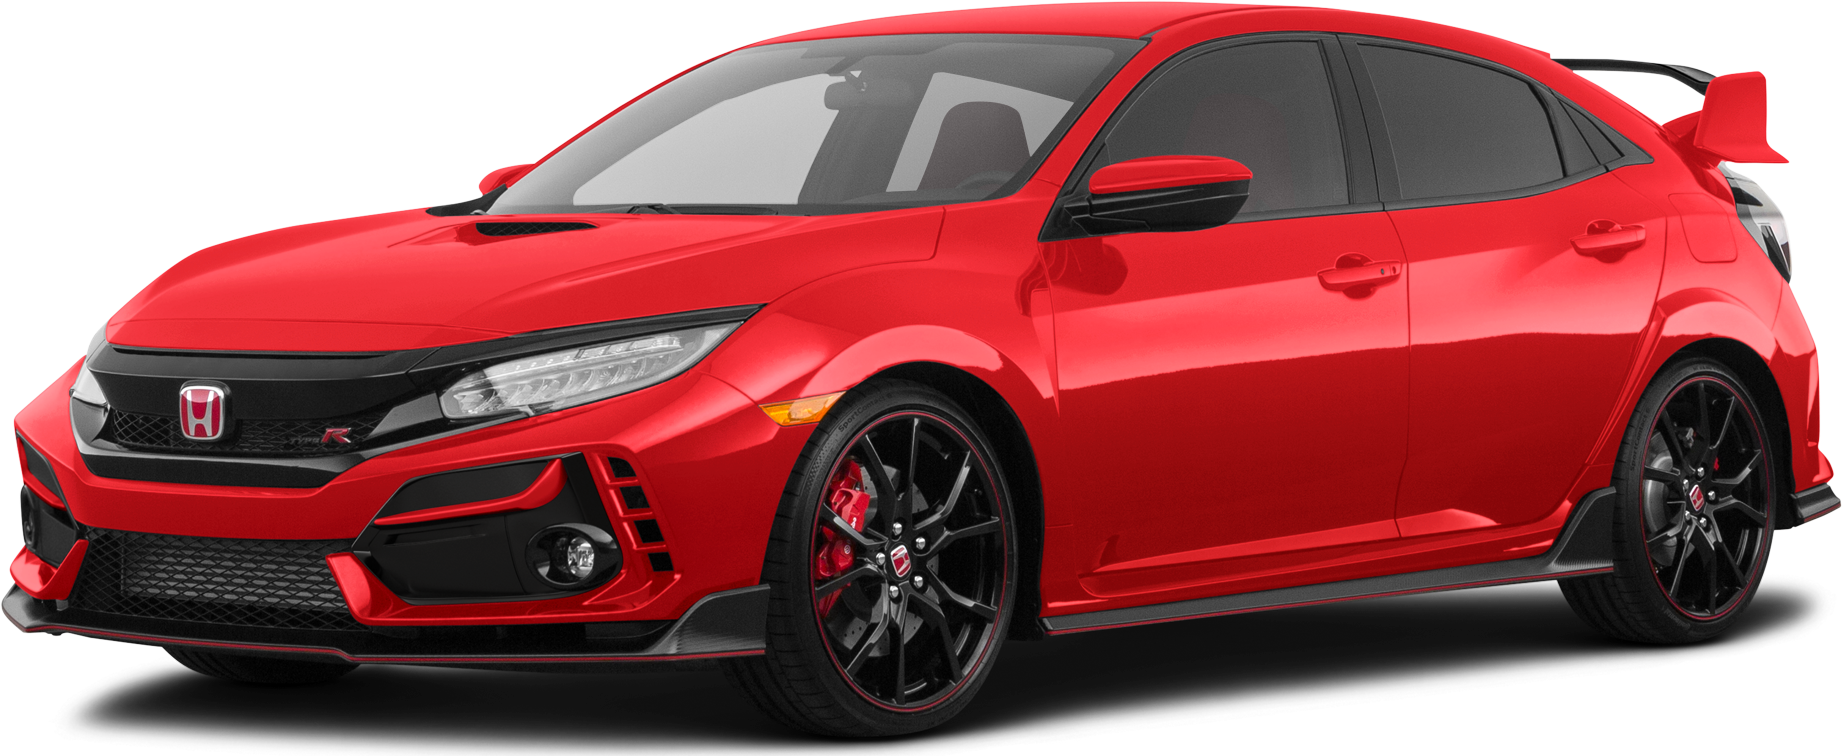 Honda Civic : Price, Mileage, Images, Specs & Reviews 